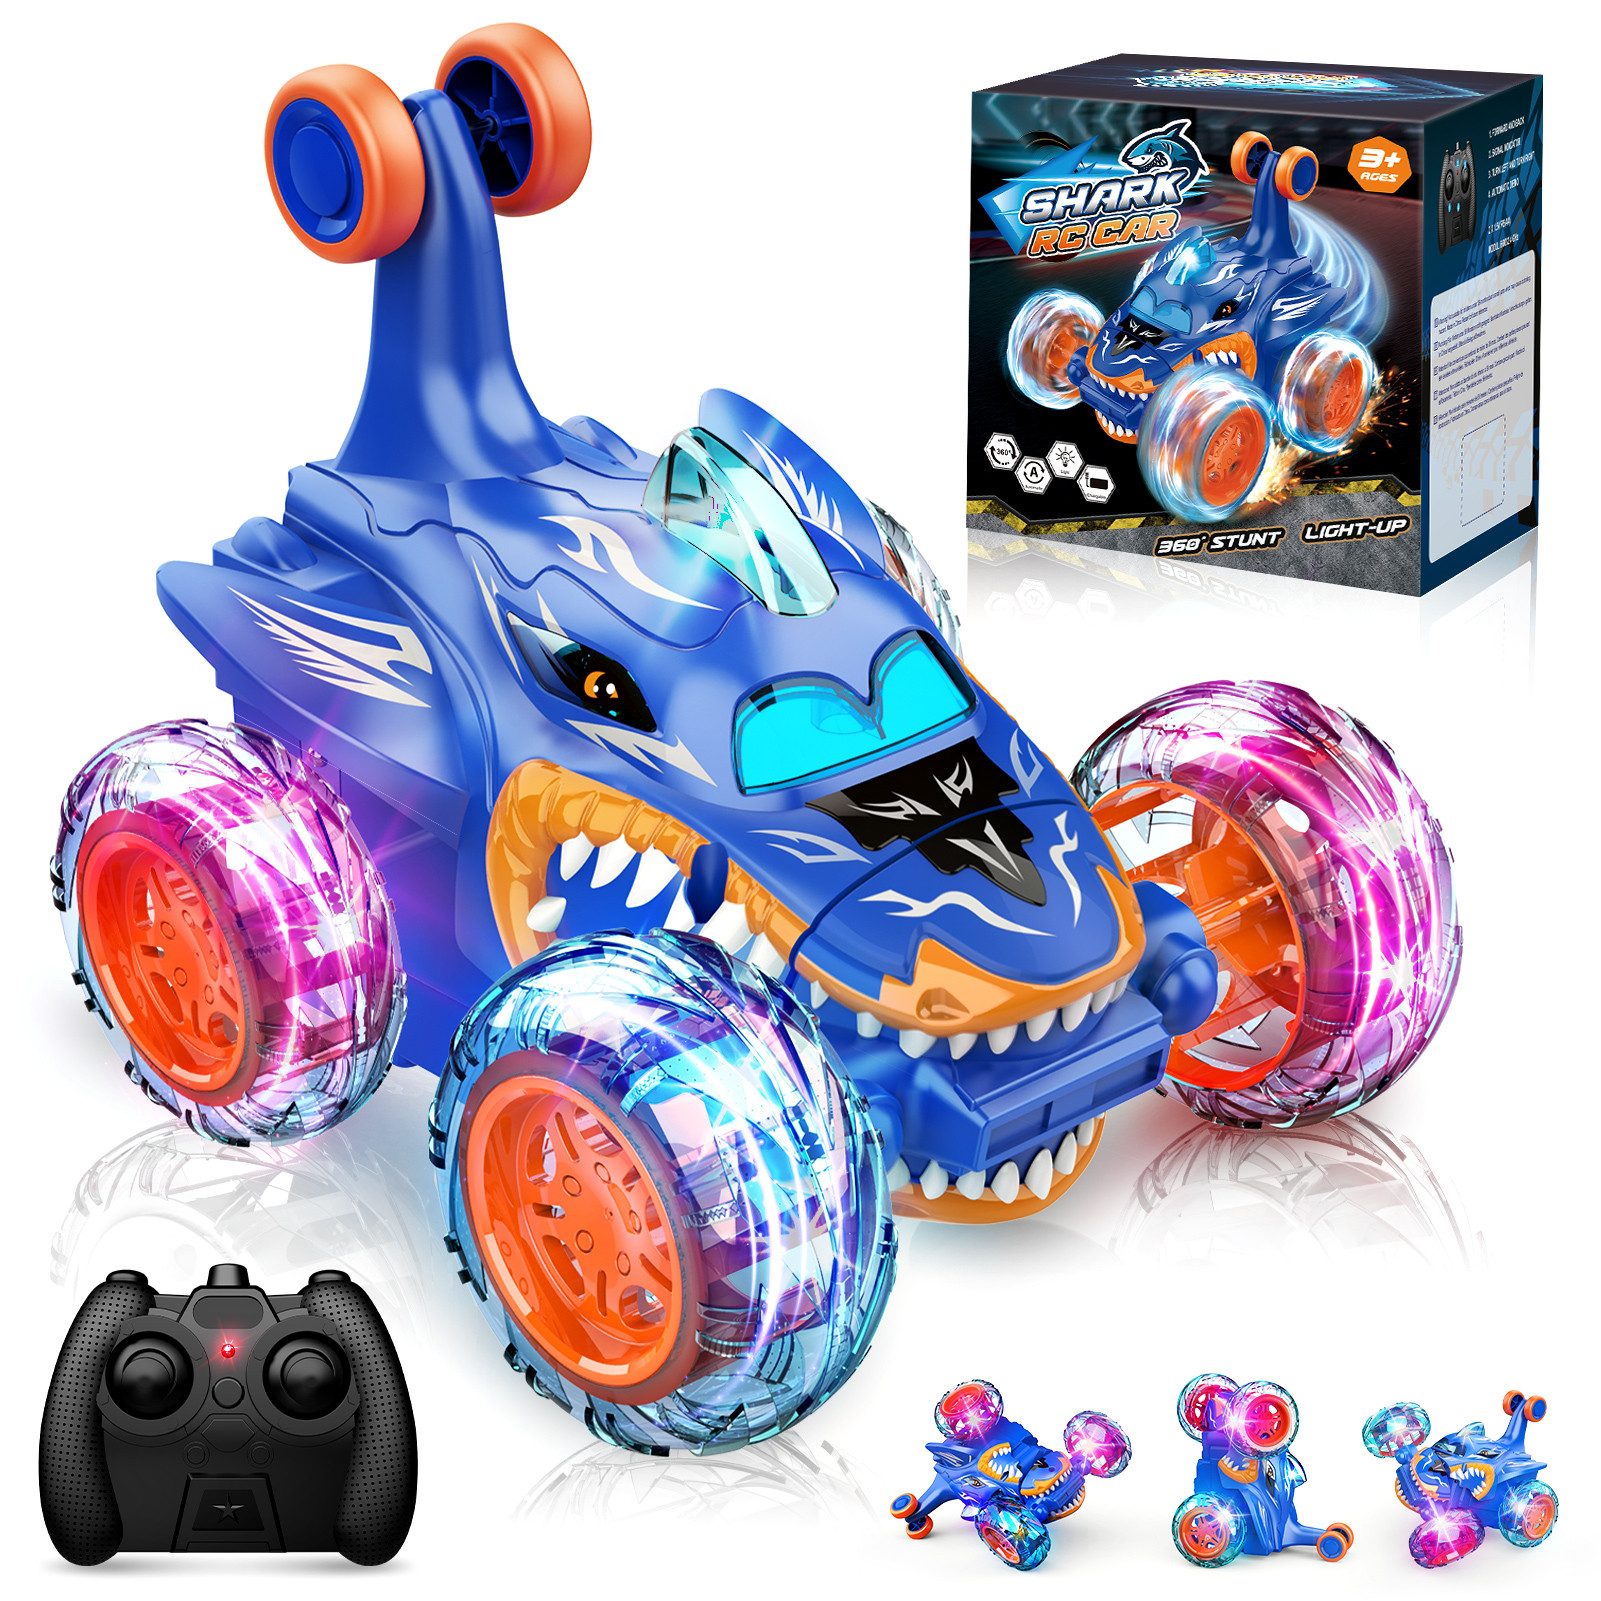 Frentree Spielzeug-Auto Ferngesteuertes Auto, Spielzeug Hai Monstertruck RC Auto